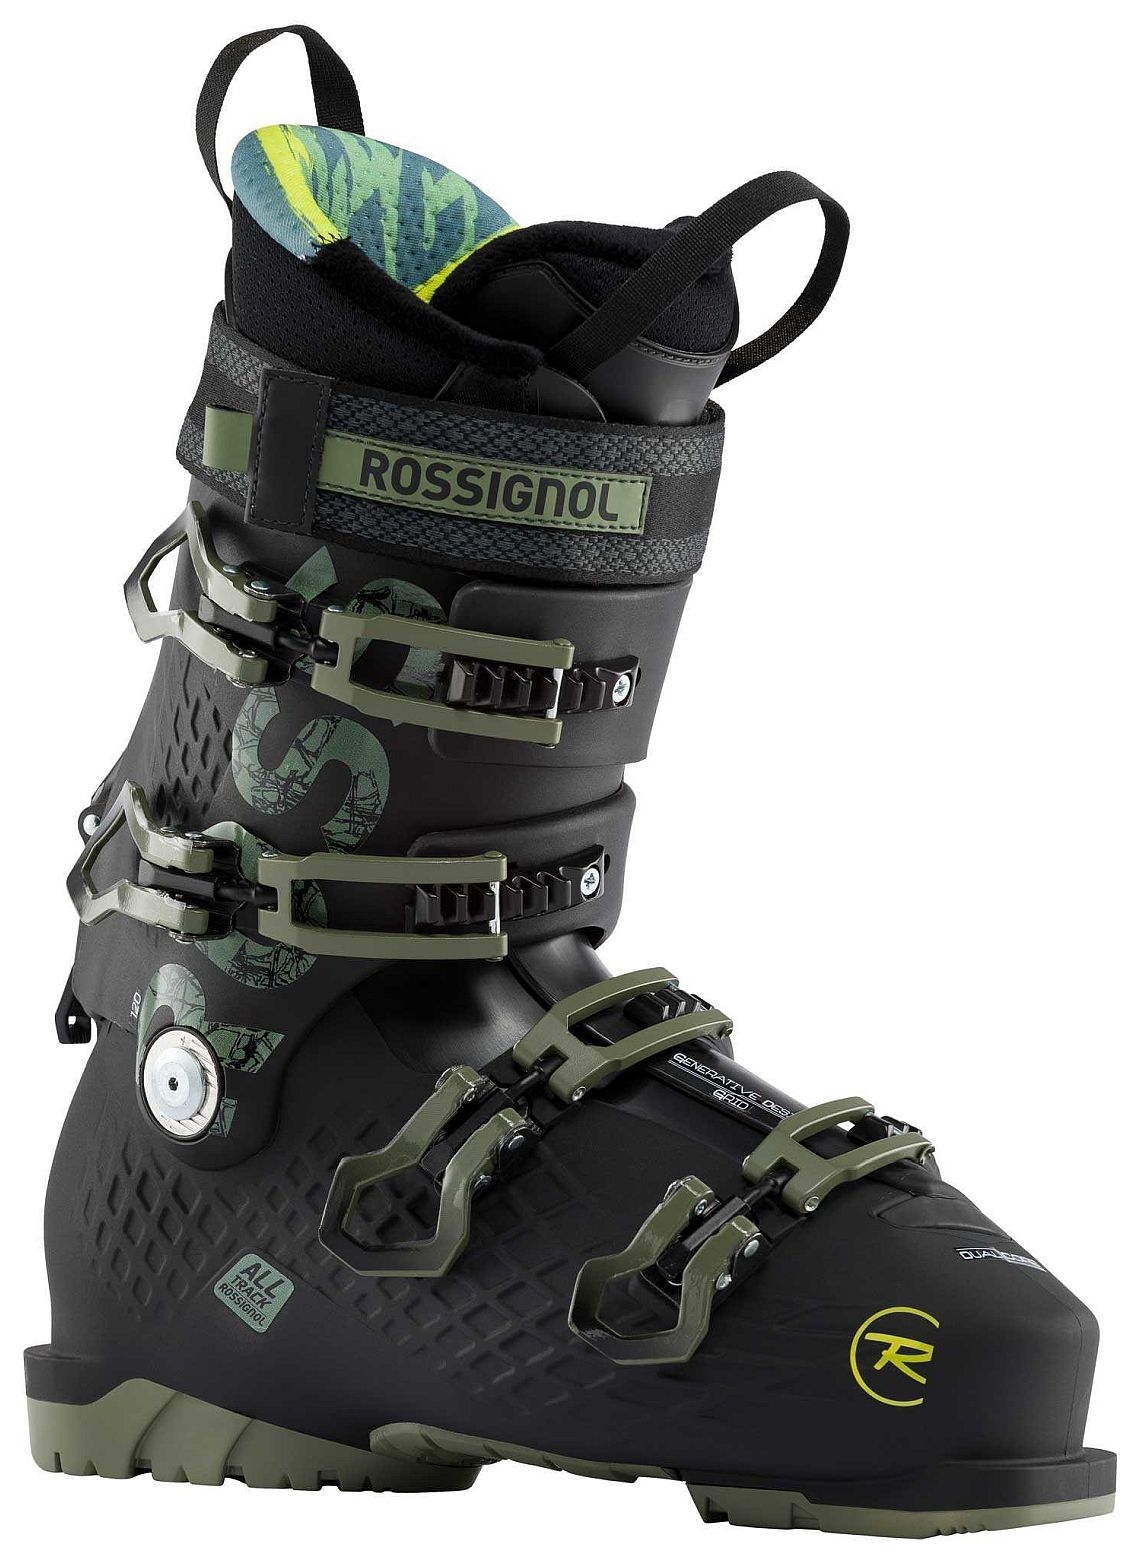 Rossignol buty narciarskie Alltrack 120